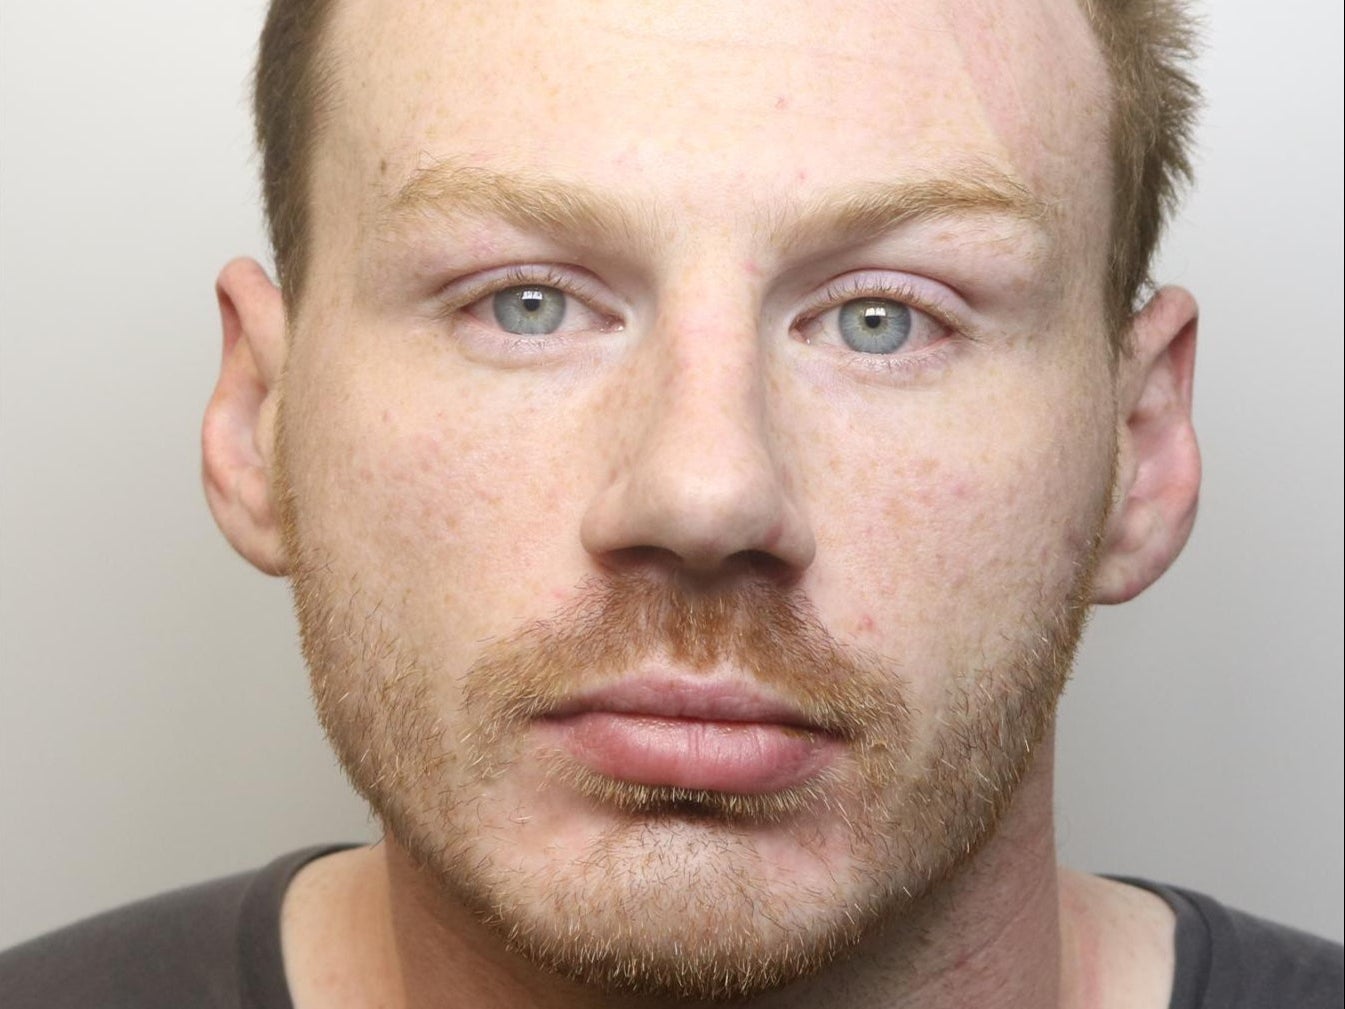 Daniel Boulton, 29, has been found guilty of double murder